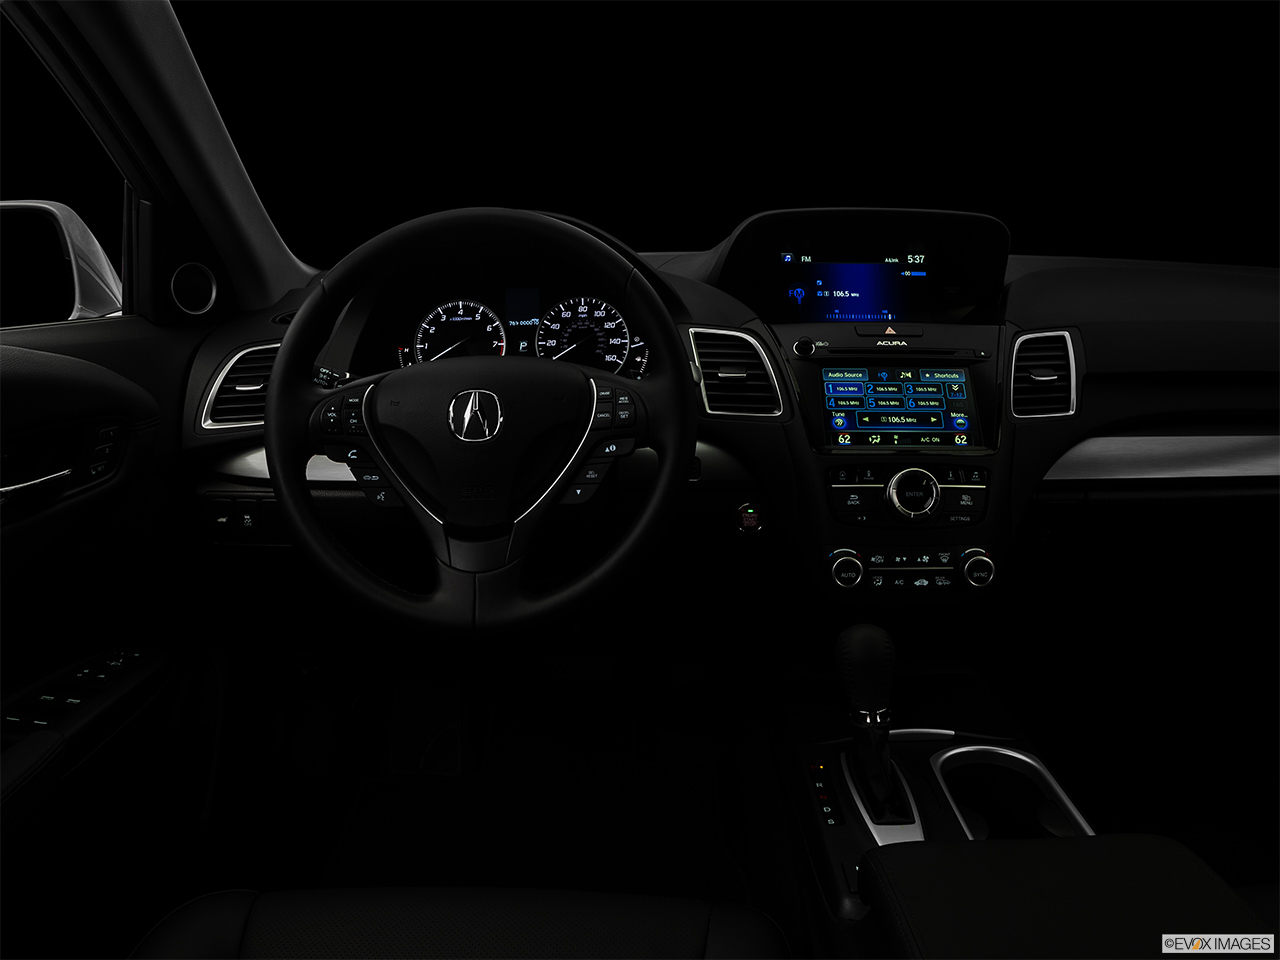 2017 Acura RDX AWD Centered wide dash shot - "night" shot. 